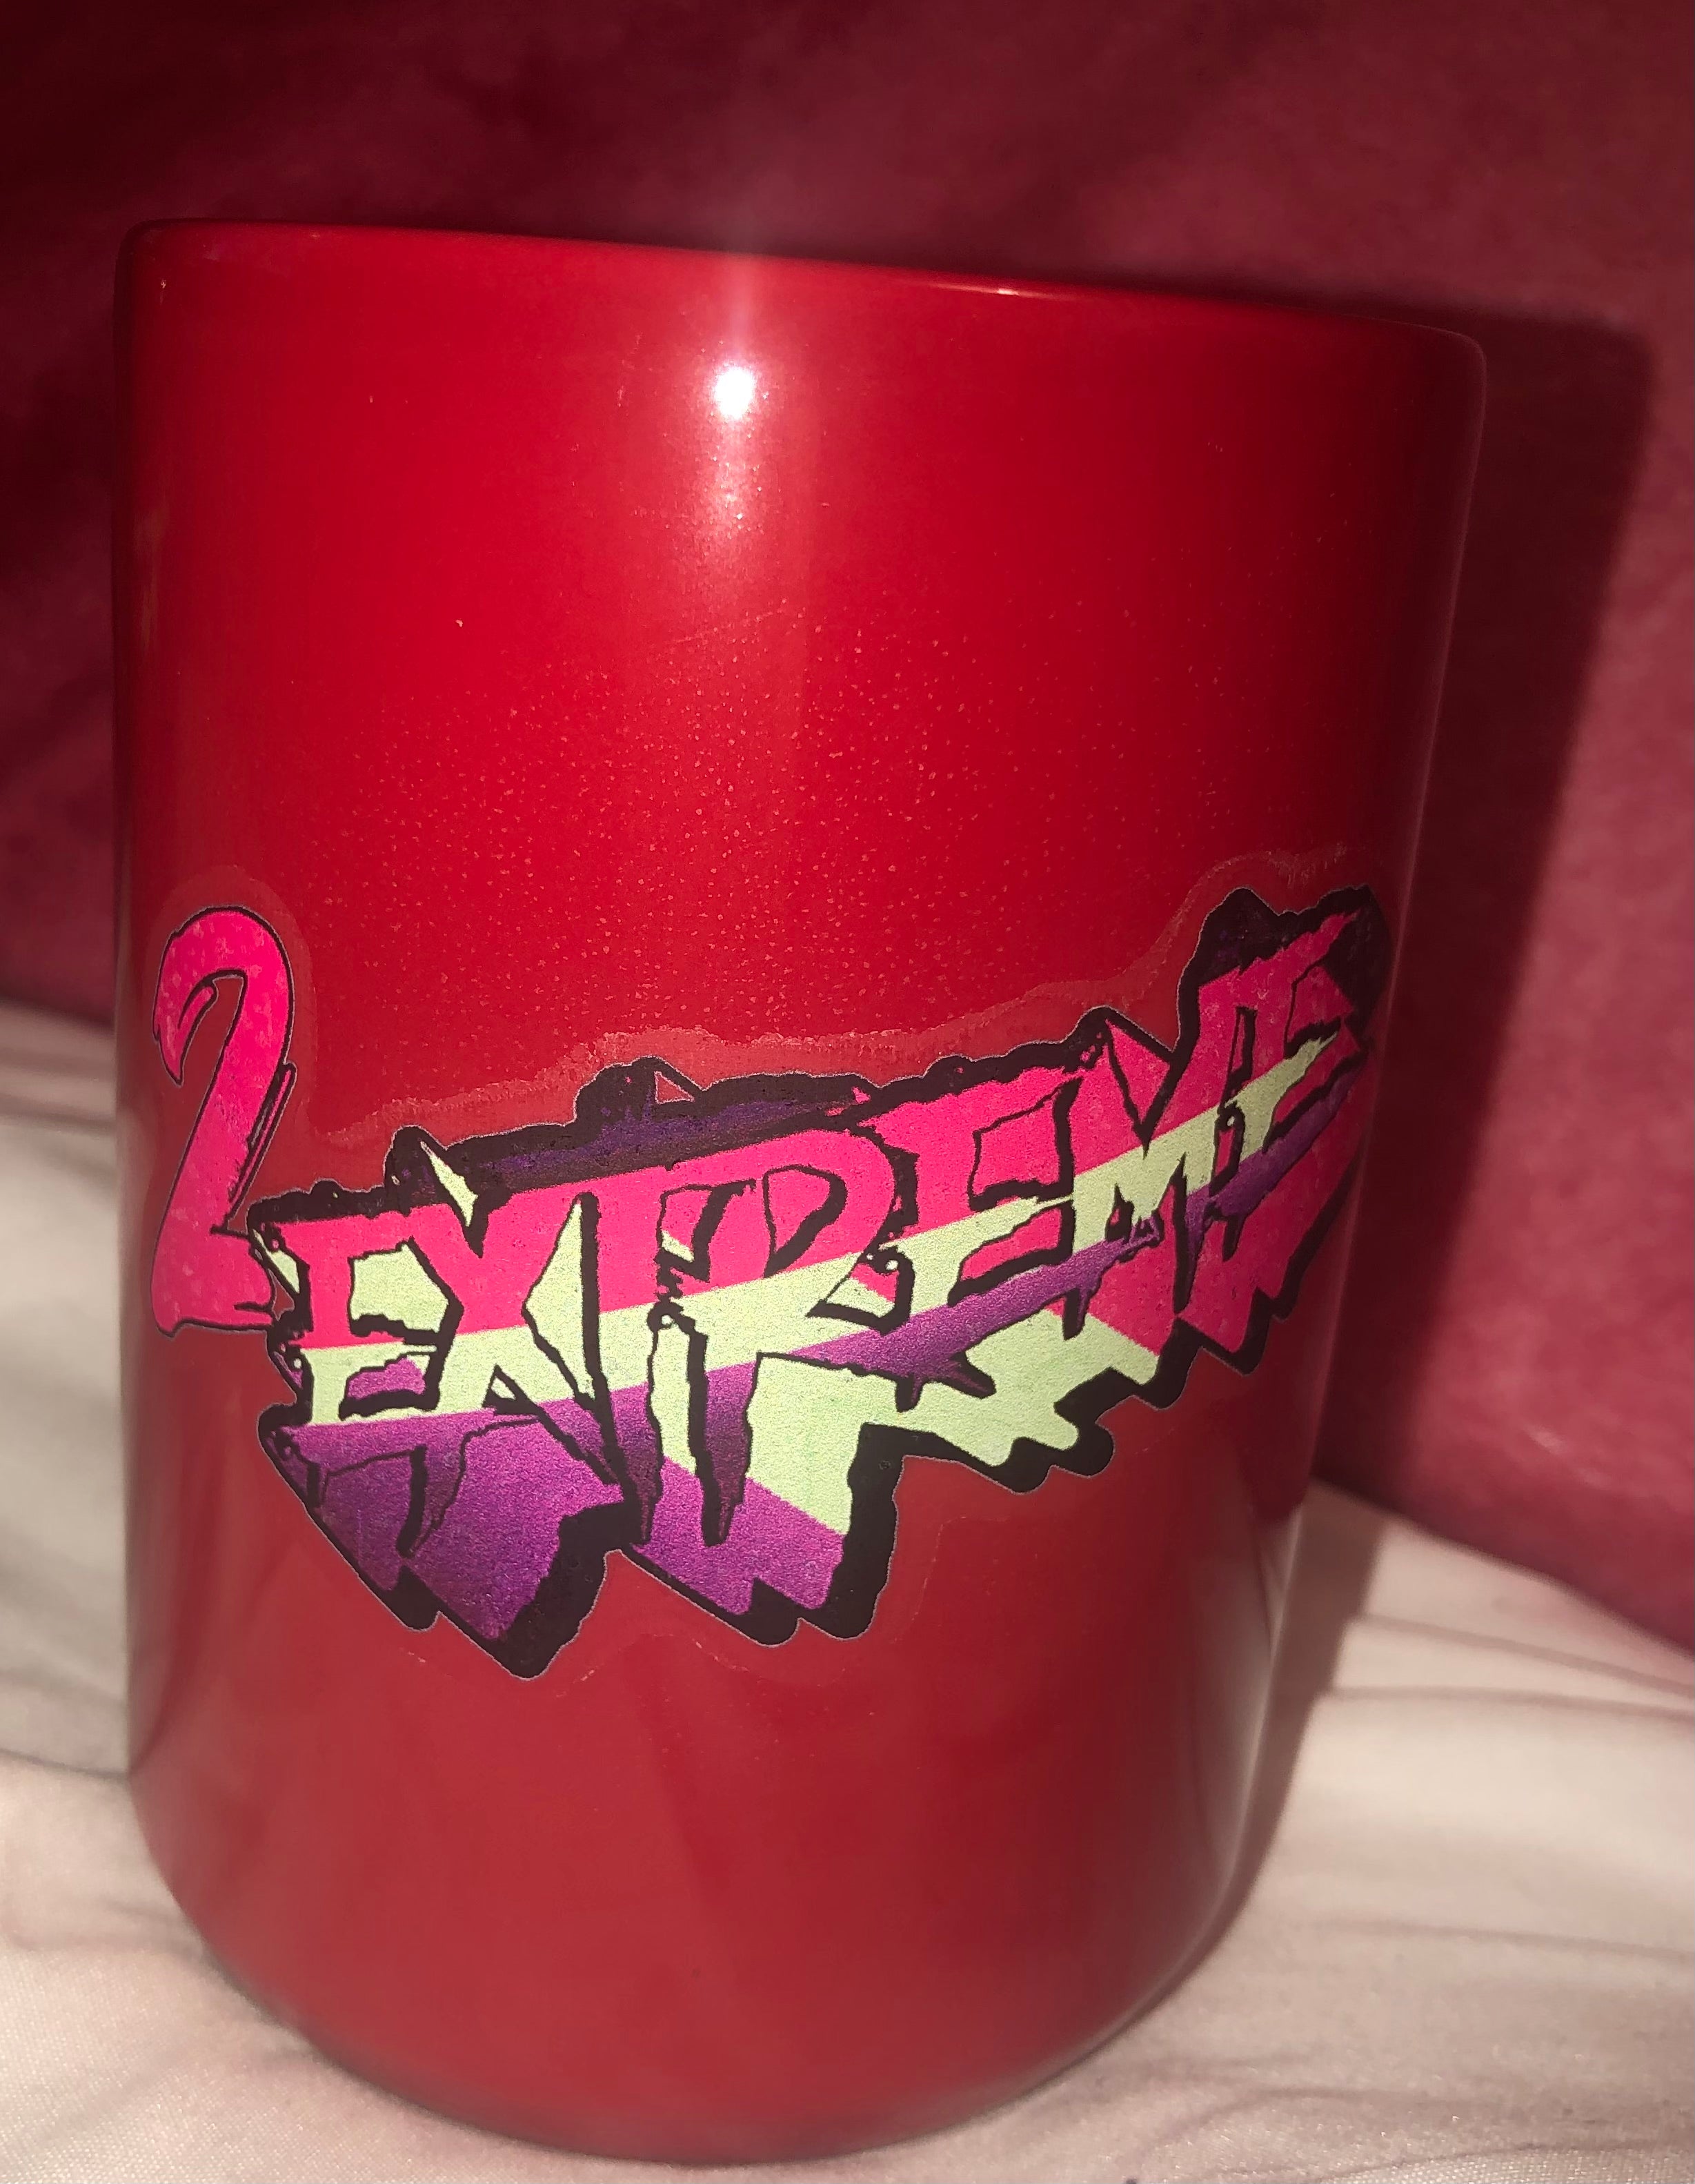 2Extreme- Red mugs